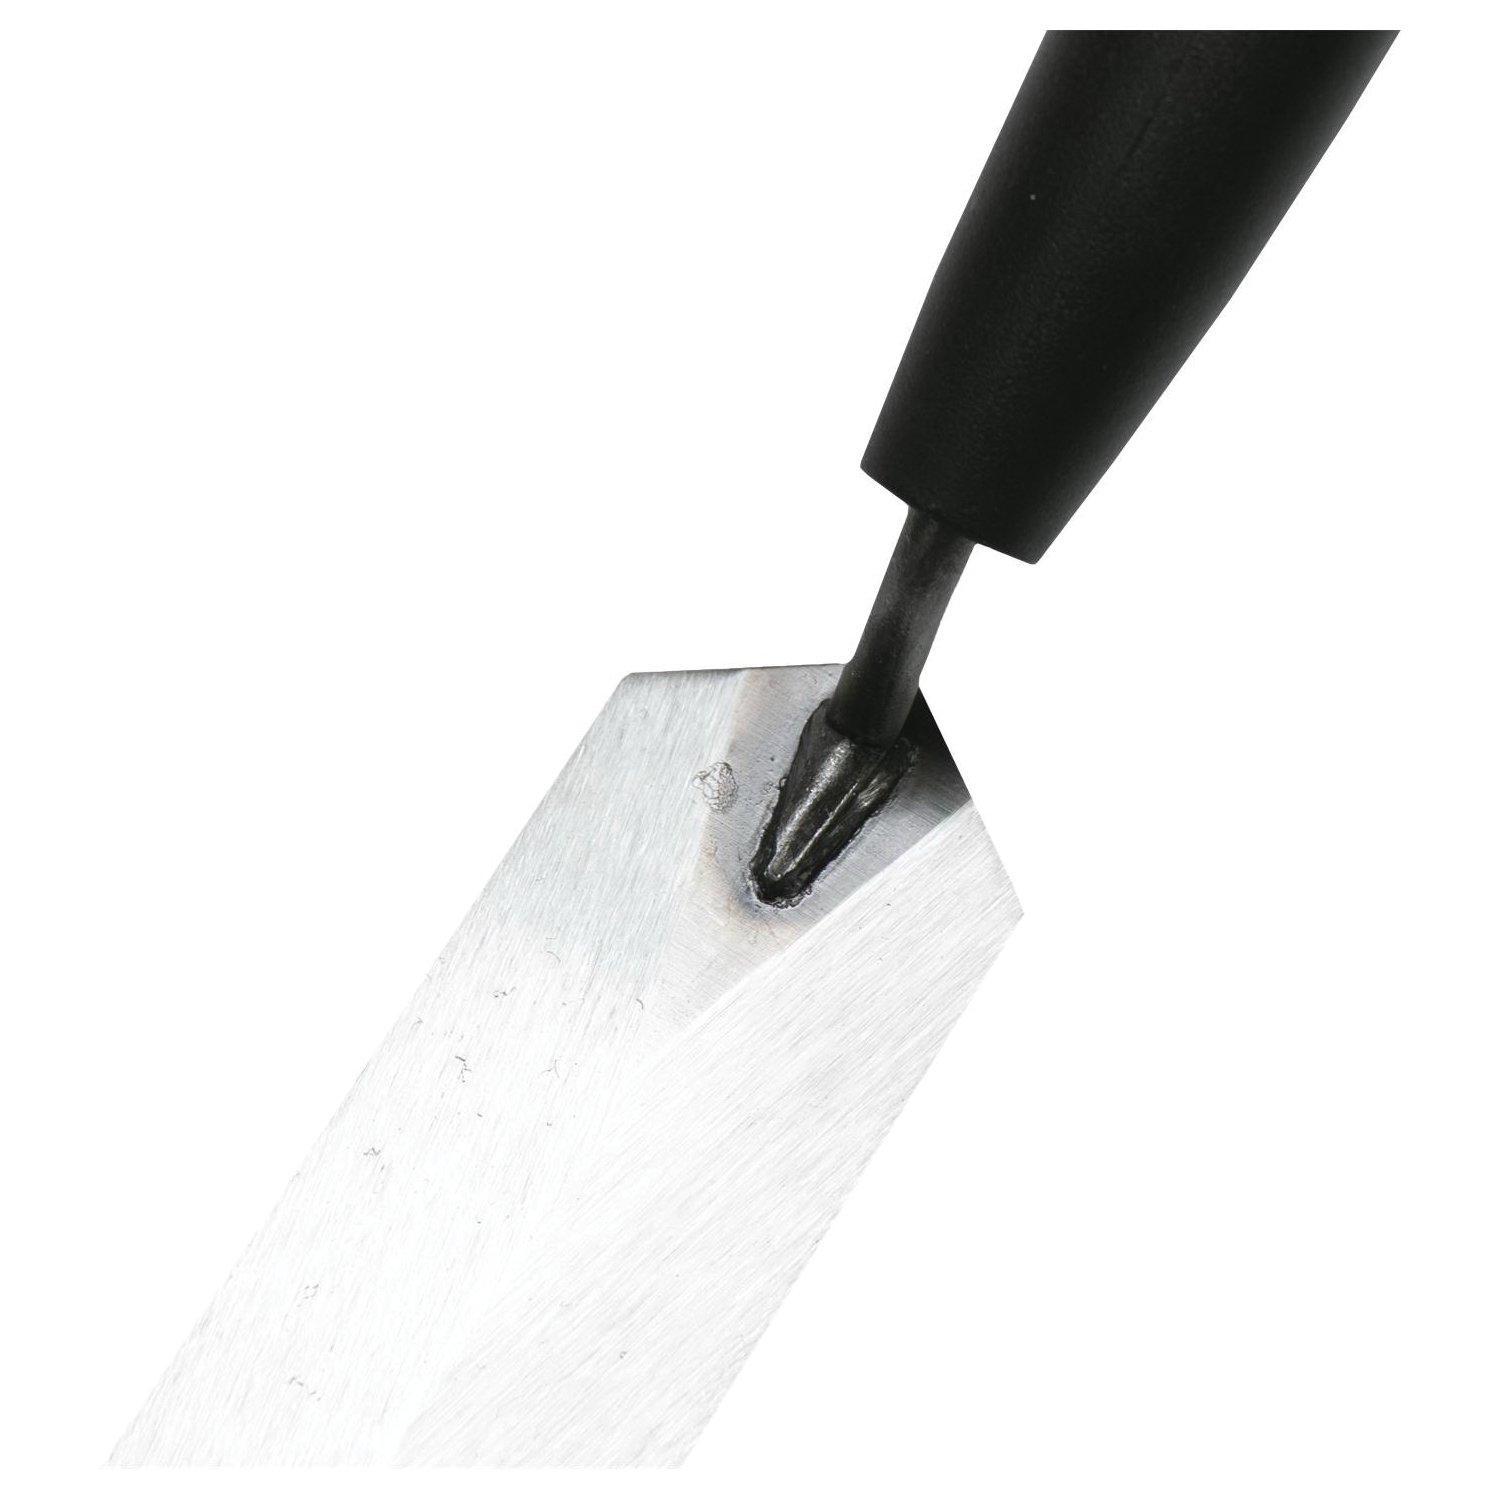 QLT MT45 Margin Trowel, Carbon Steel Blade, Plastic Handle - 3